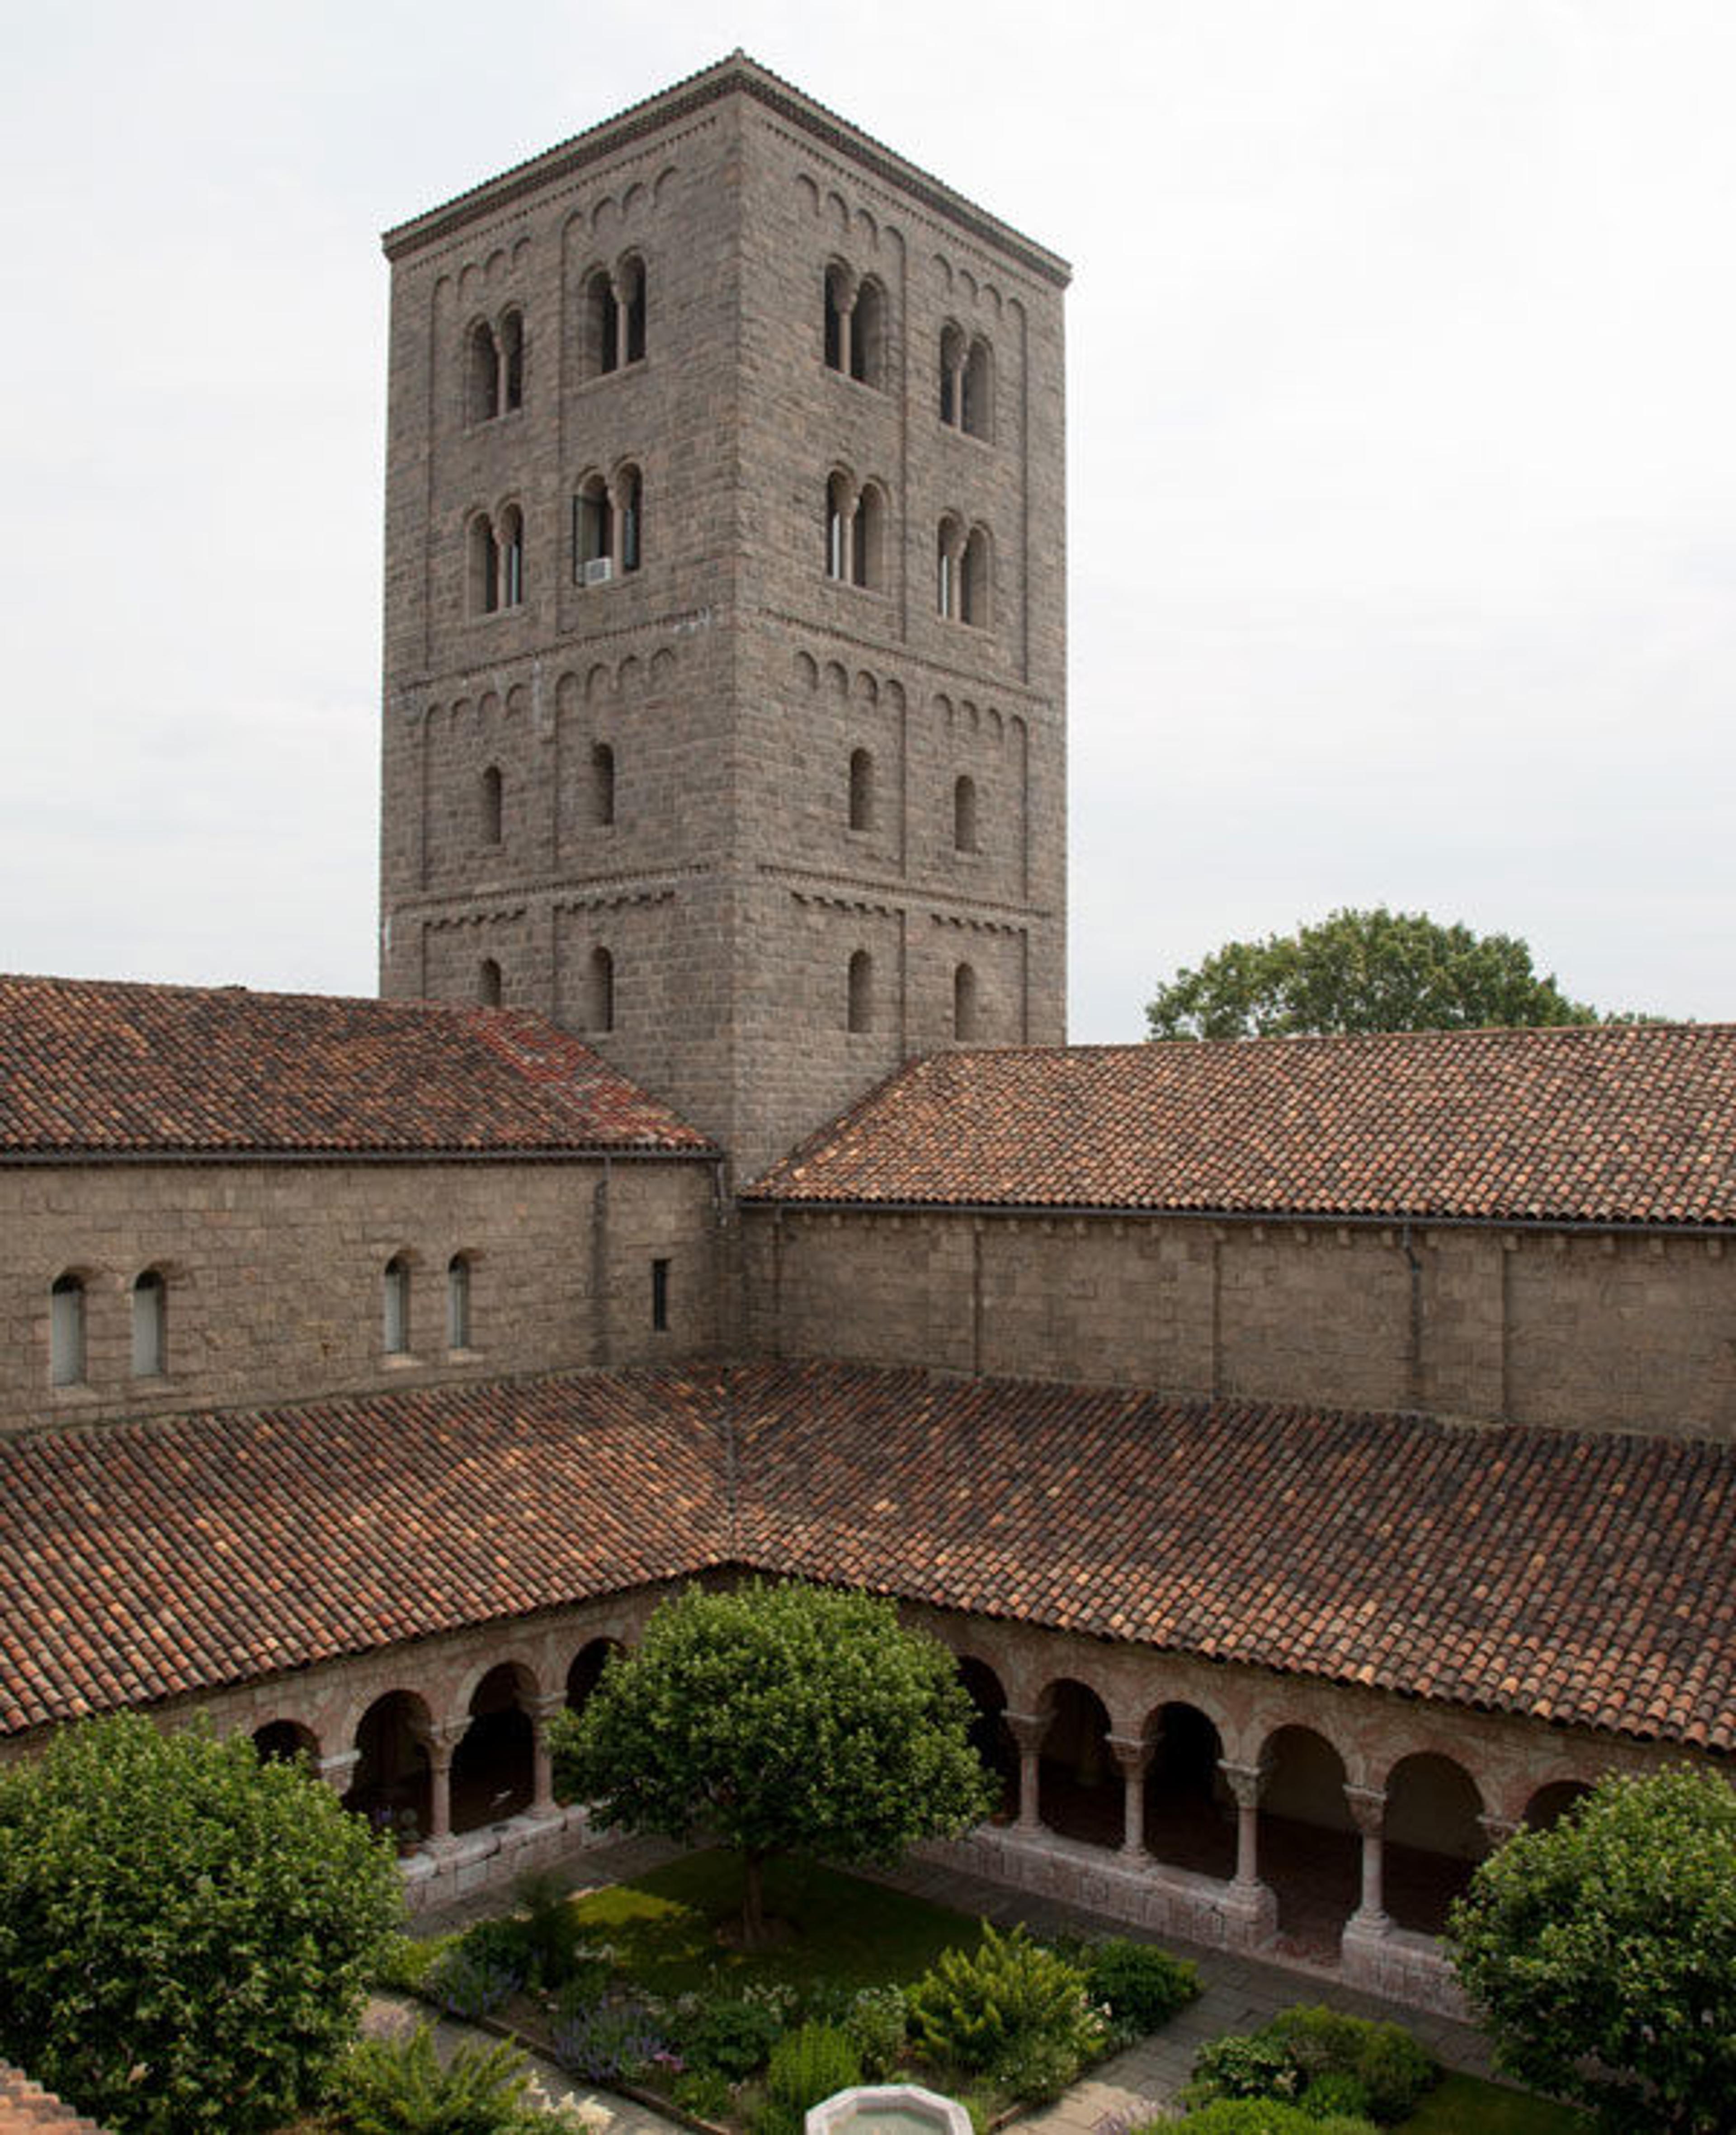 Cloister from Saint-Michel-de-Cuxa from above